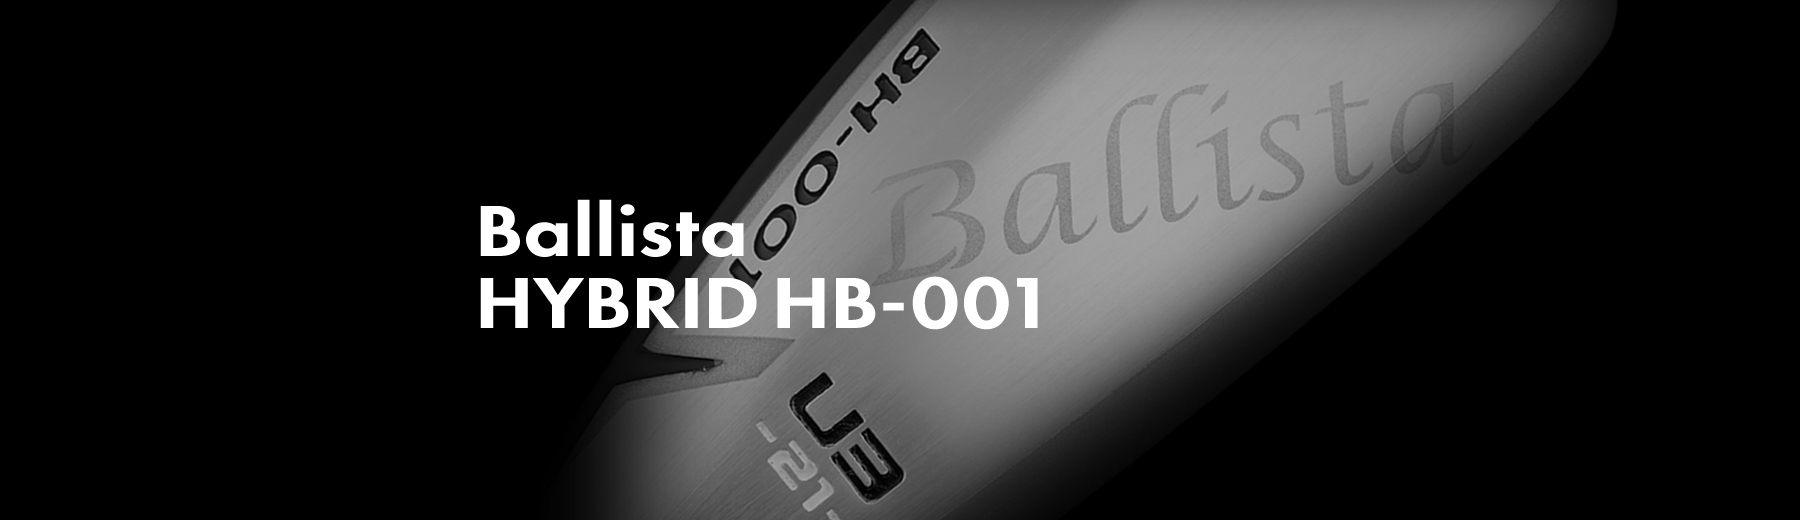 Ballista HYBRID BH-001 | ロマロオフィシャルサイト